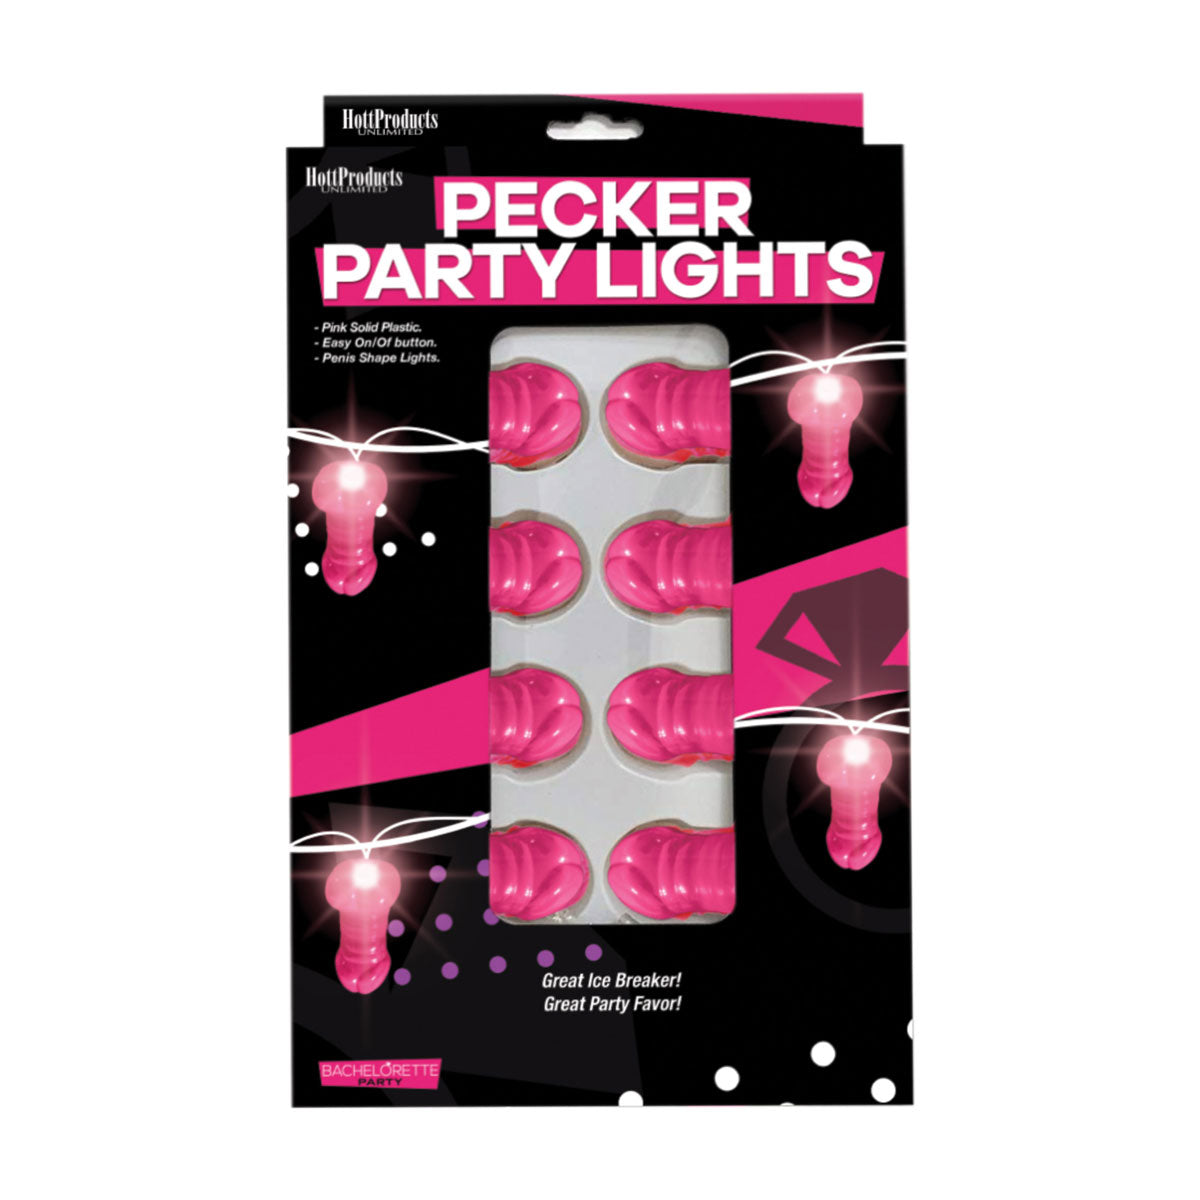 Hott Products - Bachelorette Party Pecker Party Lights – 10 ft.